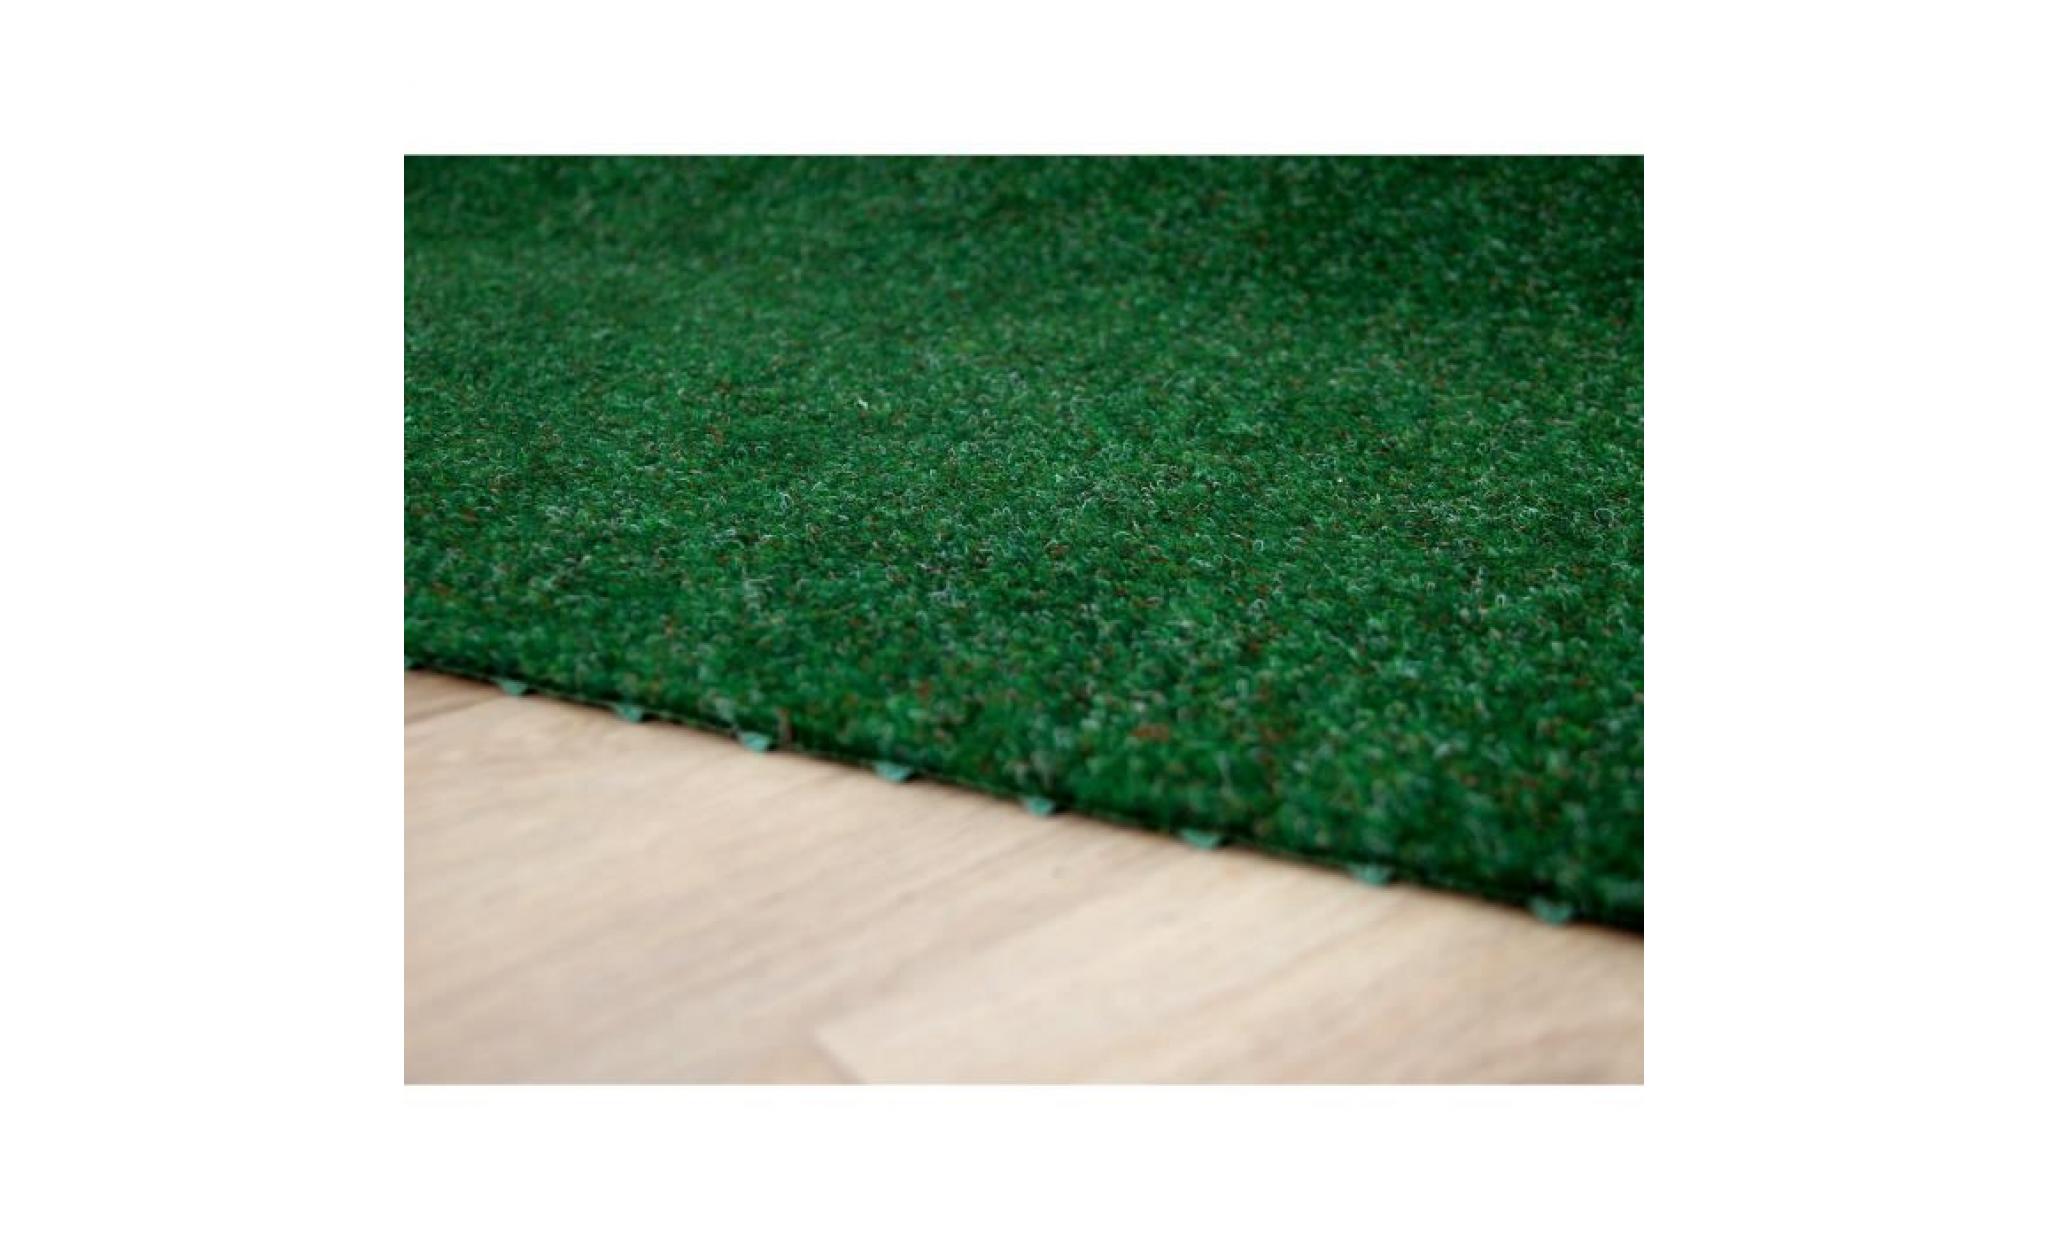 kingston   tapis type gazon artificiel – pour jardin, terrasse, balcon   anthracite [200x100 cm] pas cher